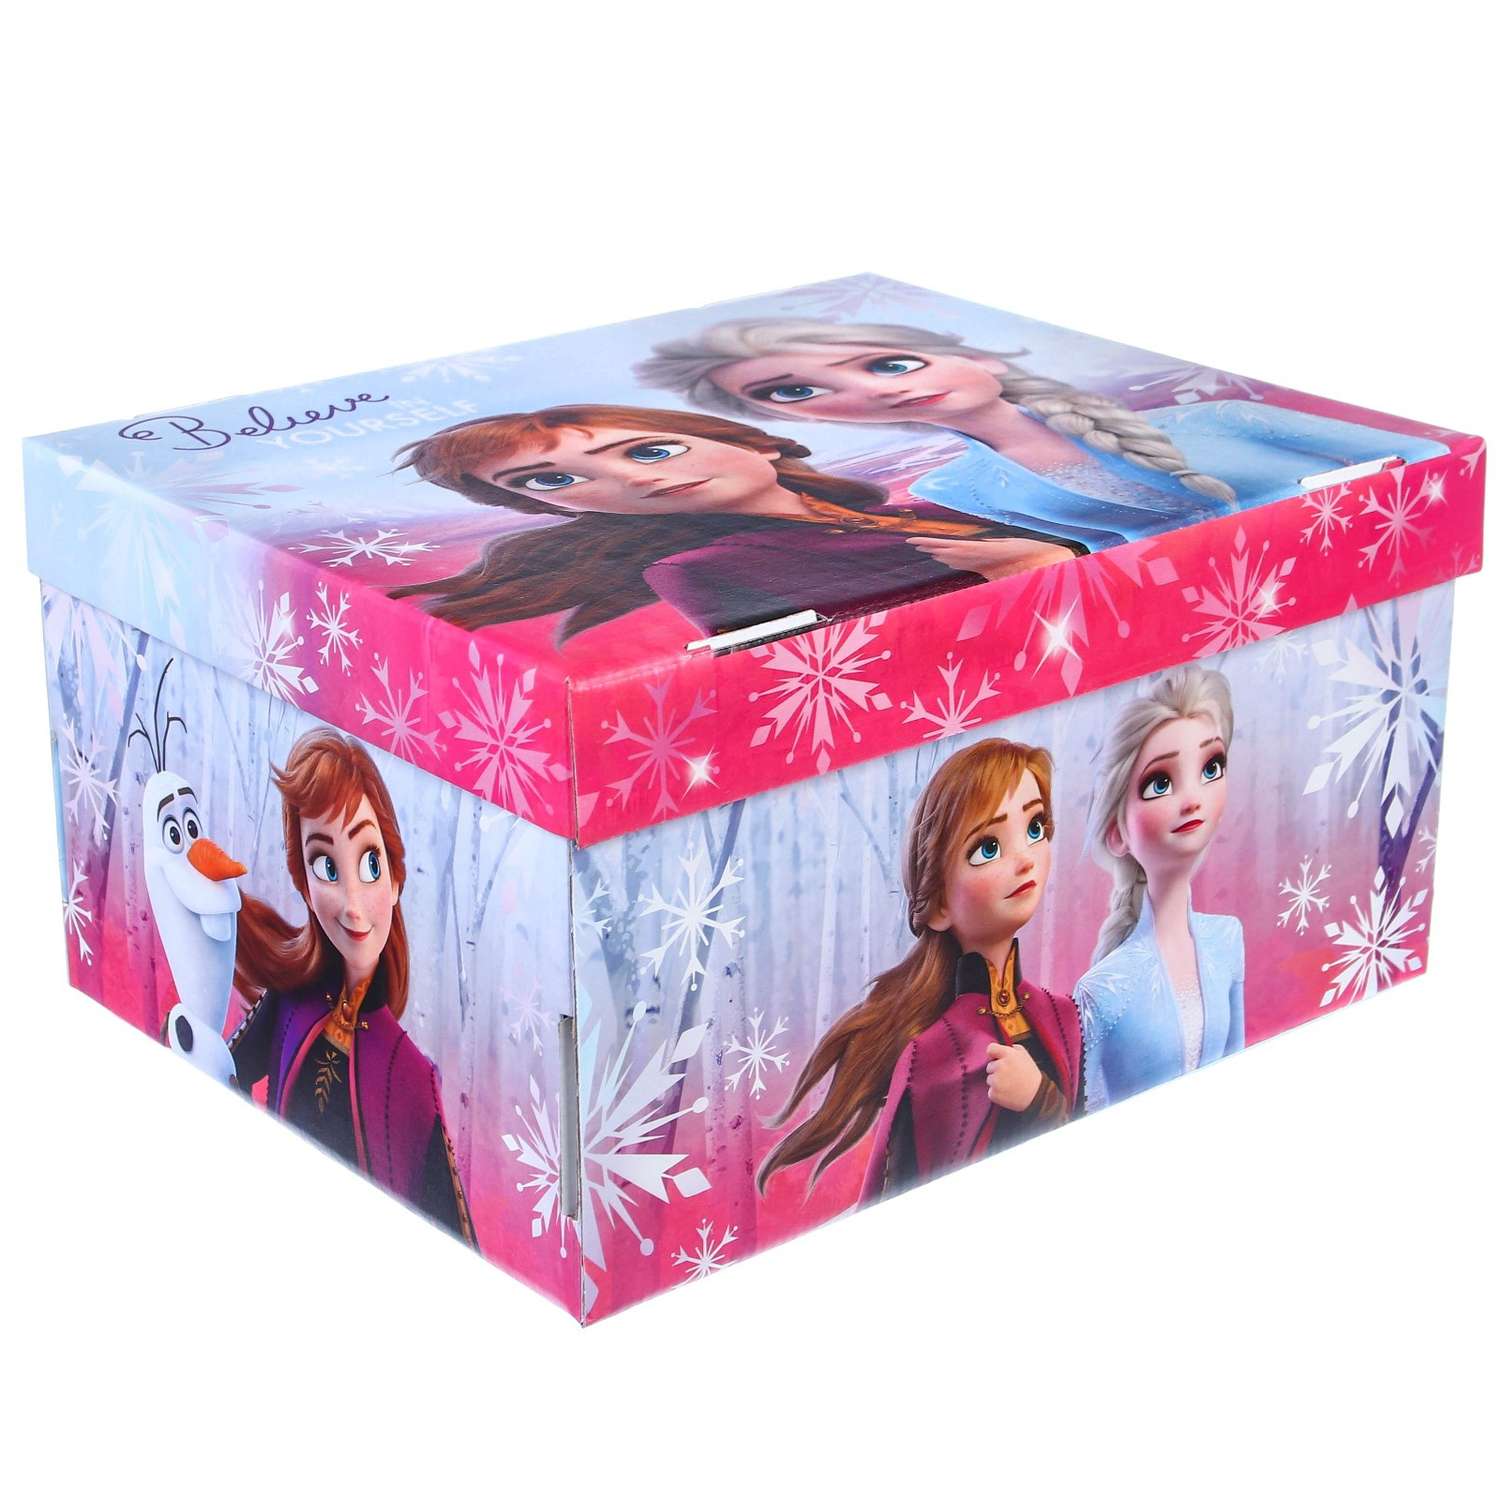 Коробка Disney подарочная складная с крышкой 31 х 25 5 х 16 «Believe» Холодное сердце - фото 1